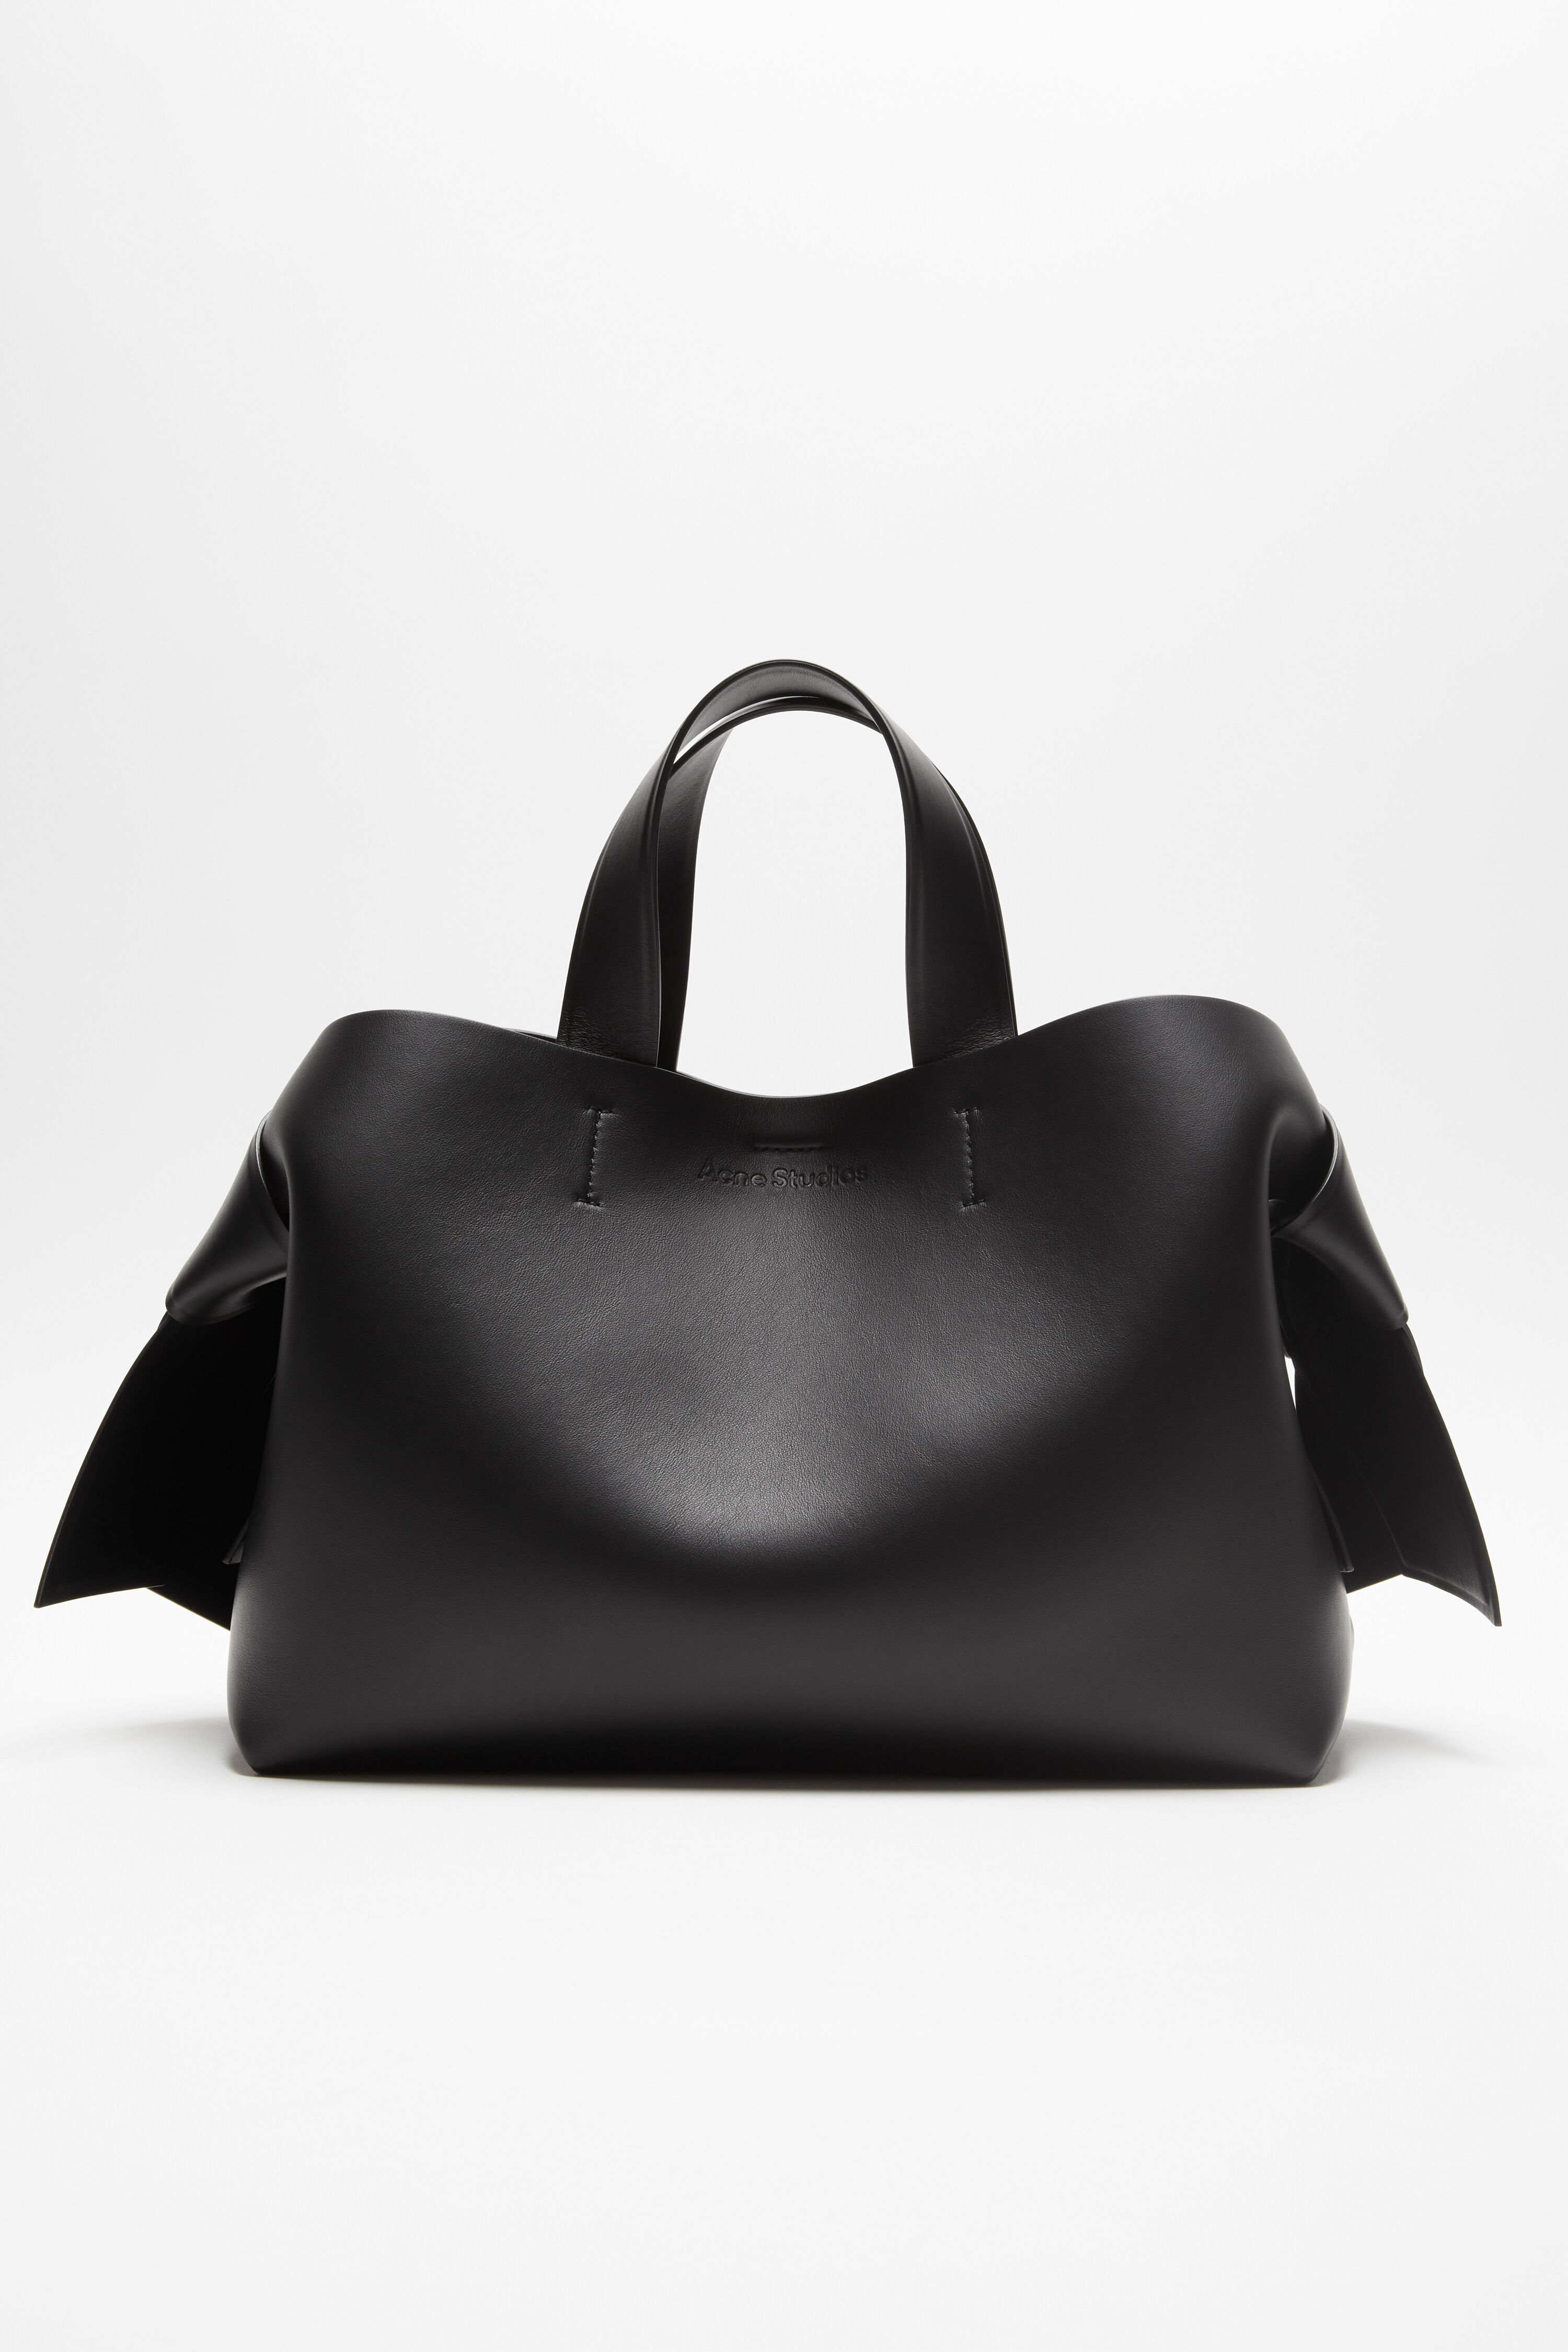 Acne Studios – Women's Bags